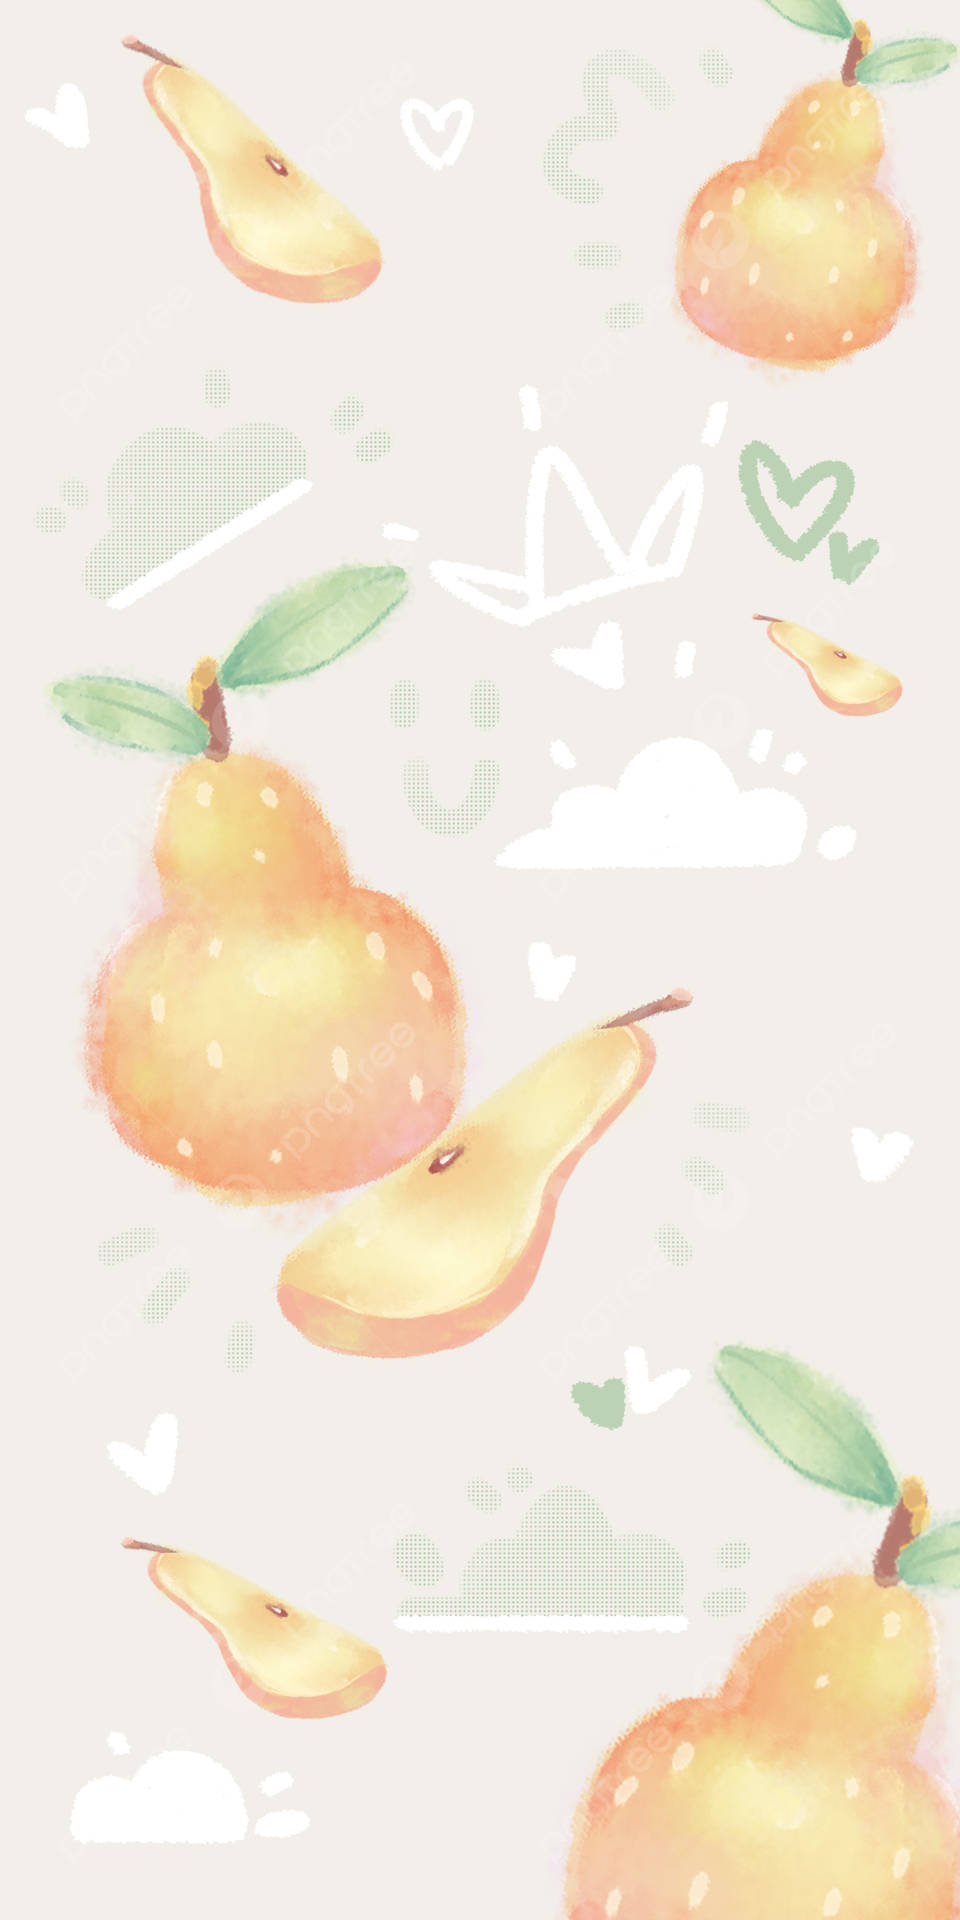 Aesthetic Pear Illustration Wallpaper